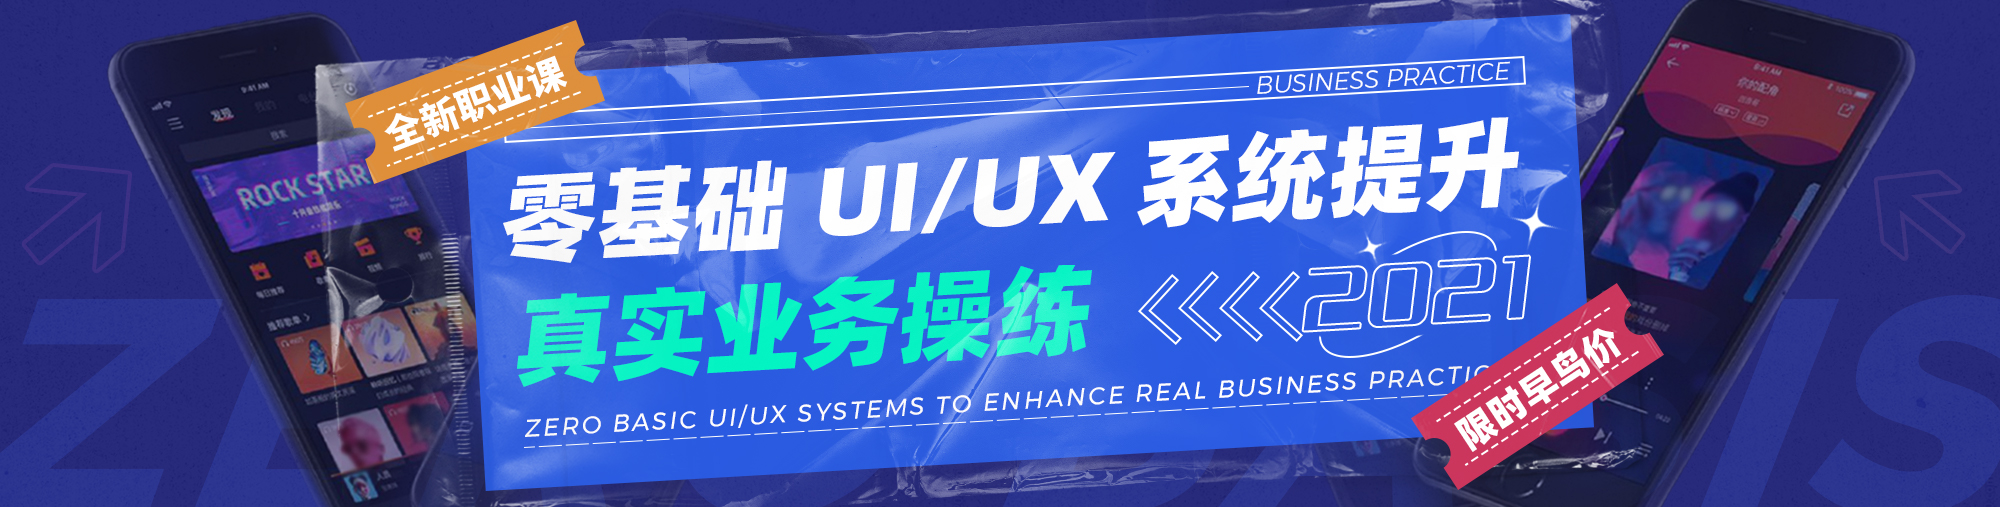 UI/UX设计师培养计划